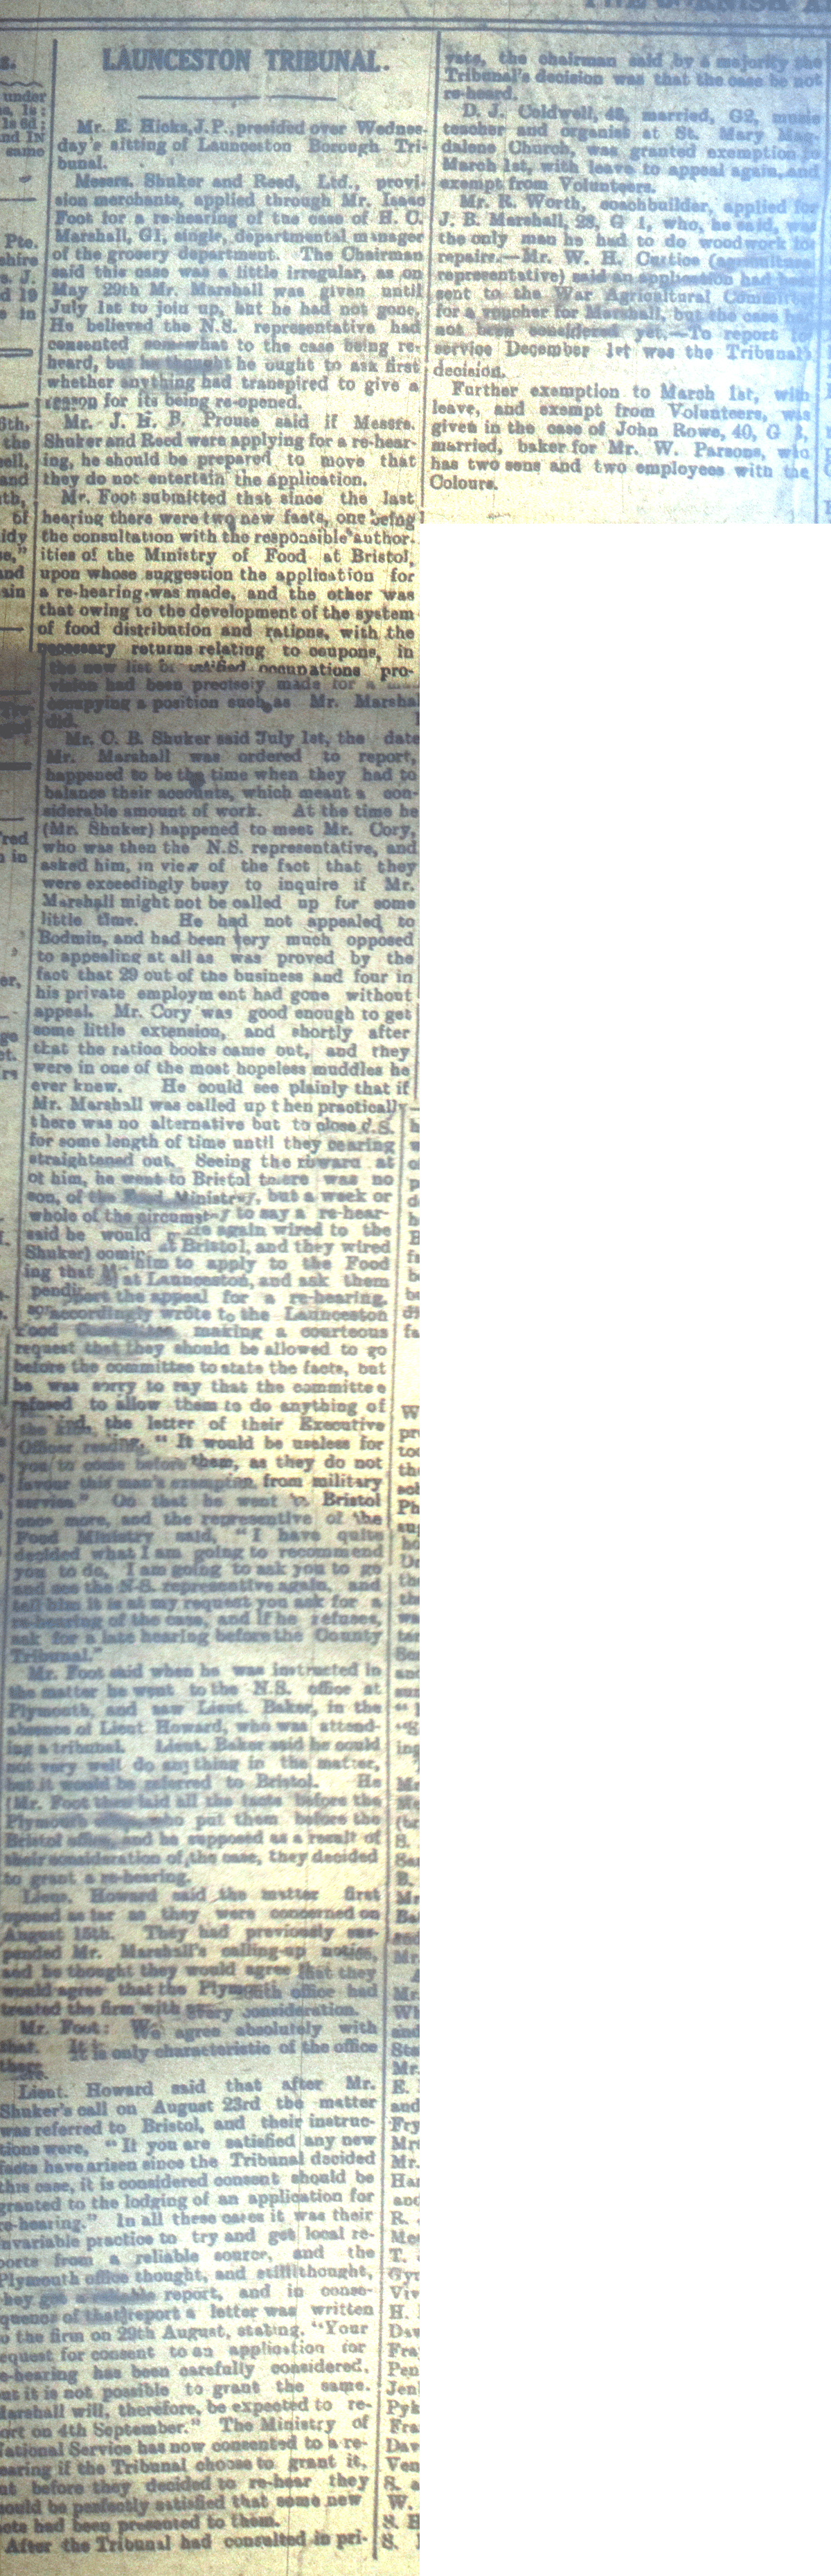 Launceston Tribunal, October 5th, 1918